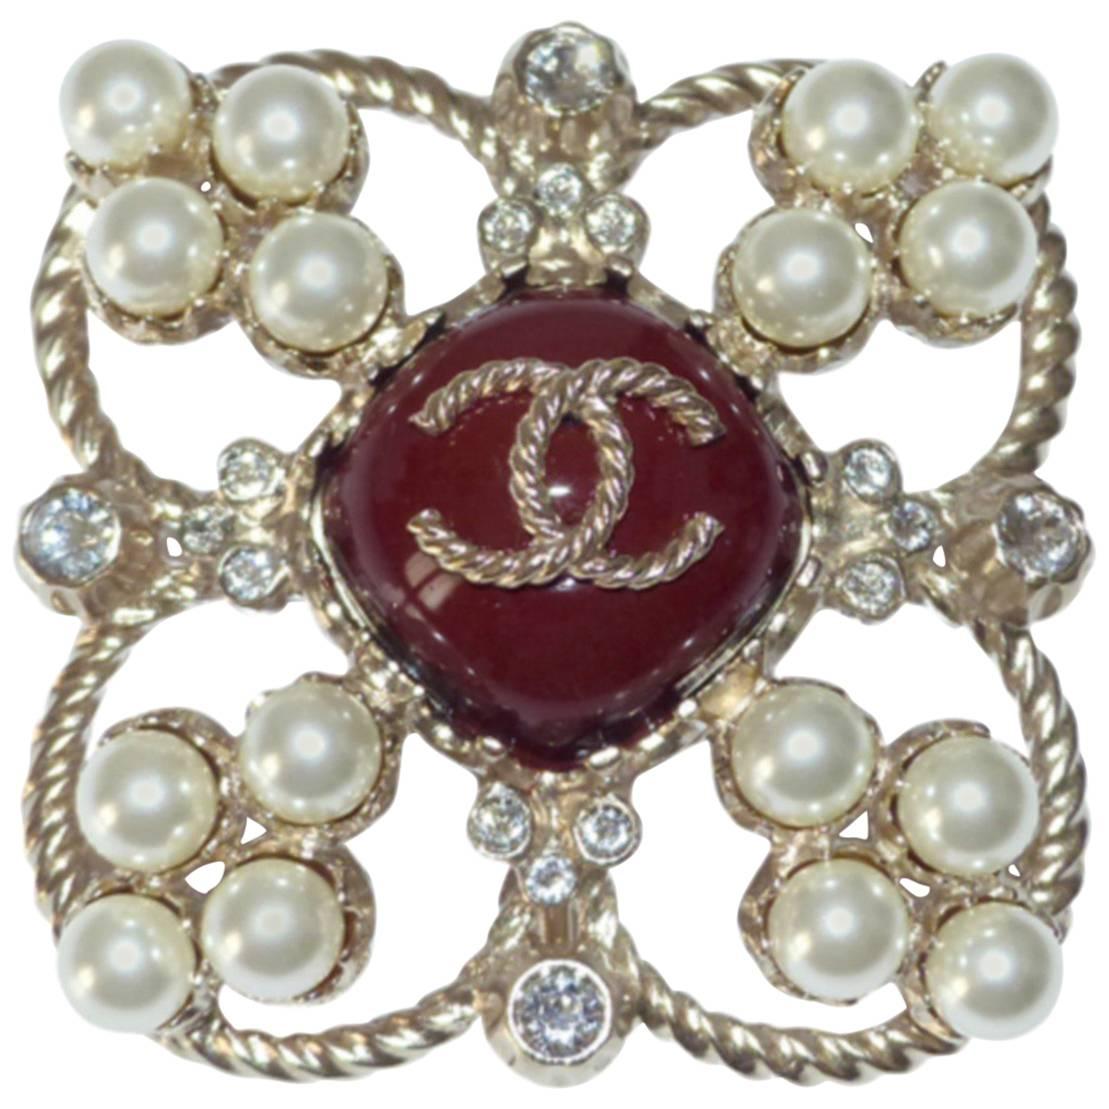 MA-GNI-FIC Chanel Brooch Paris Edimbourg Pearls and CC logo Excellente Condition